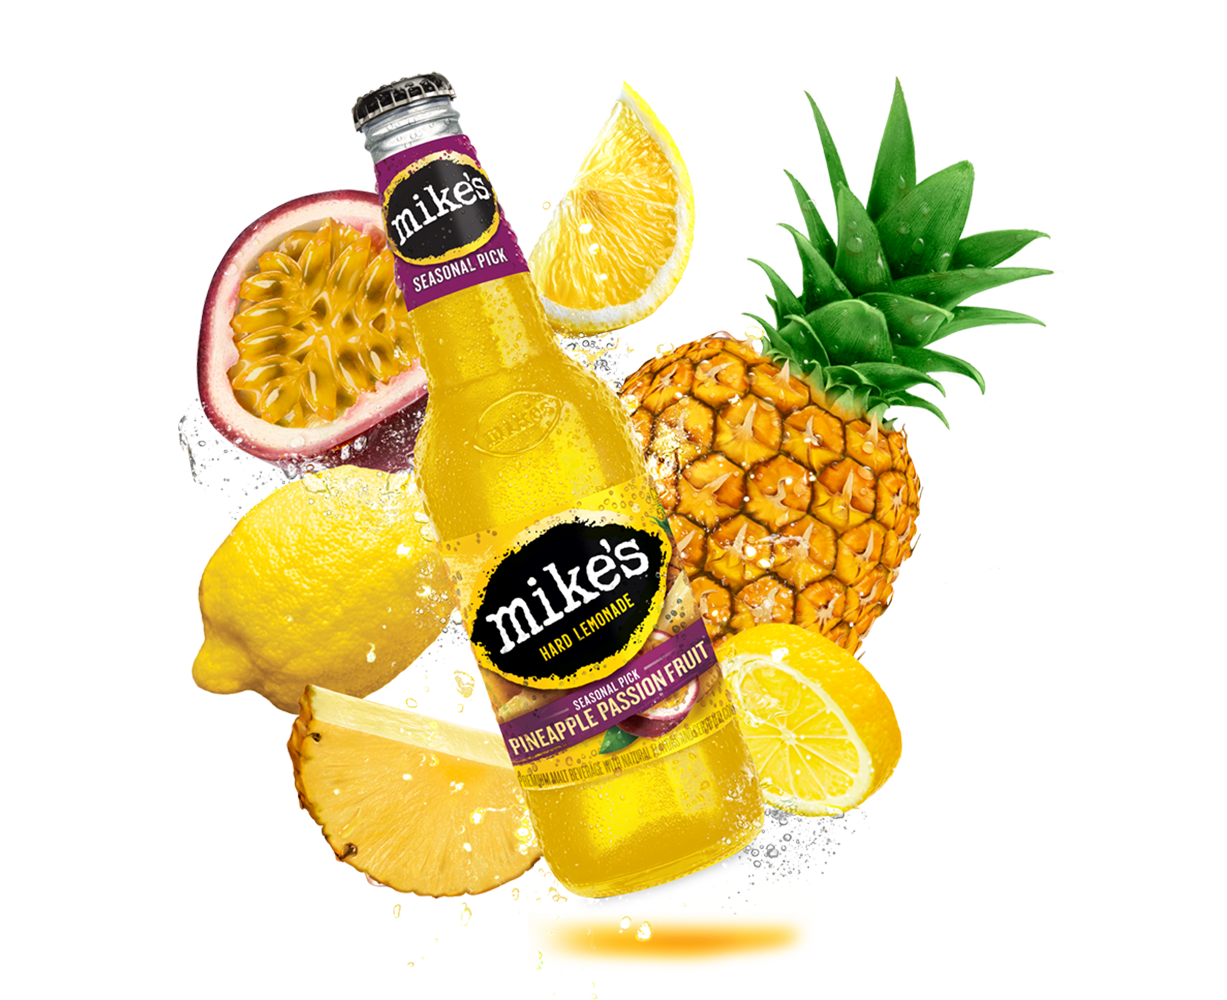 Mike's Hard Lemonade Pineapple Seasonal Image